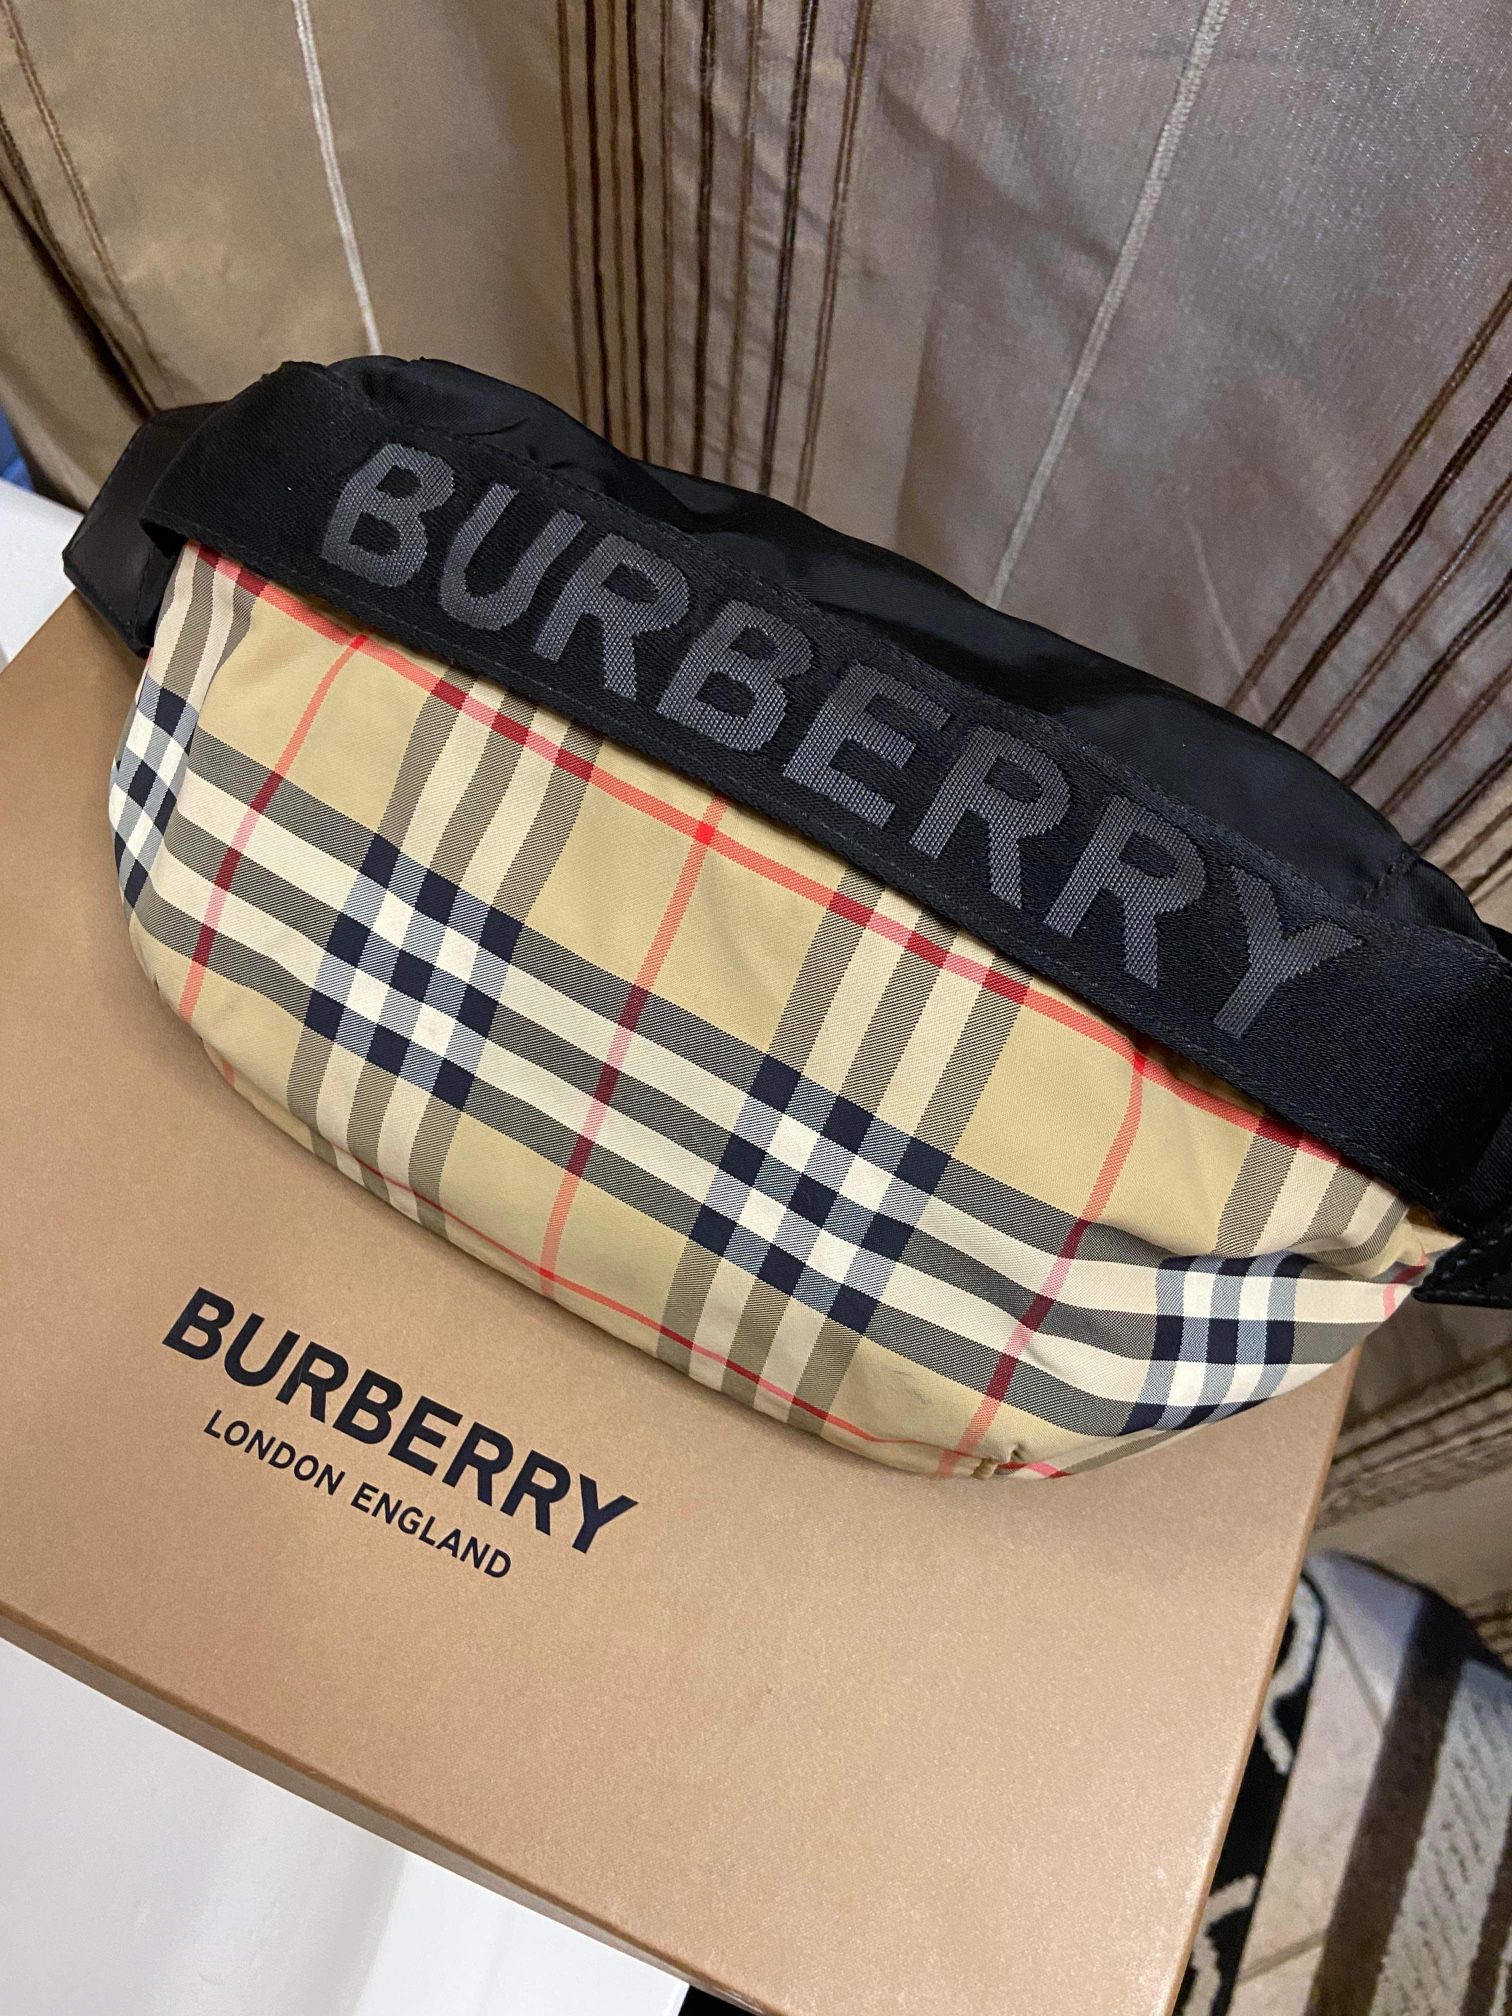 SOLD Authentic Burberry bag  Burberry bag, Burberry london, Burberry